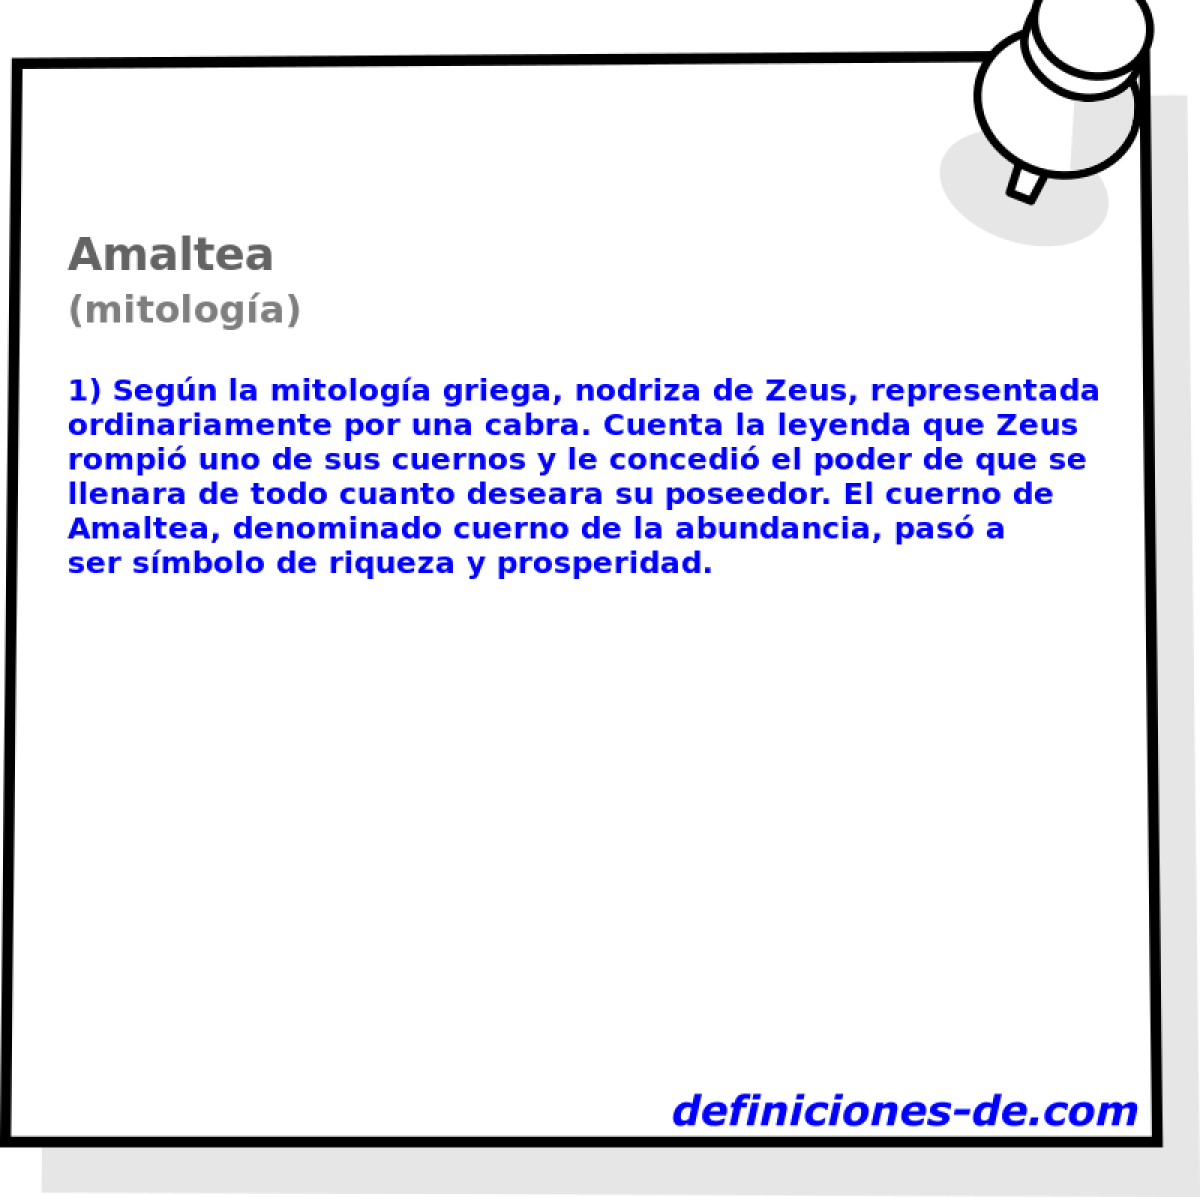 Amaltea (mitologa)